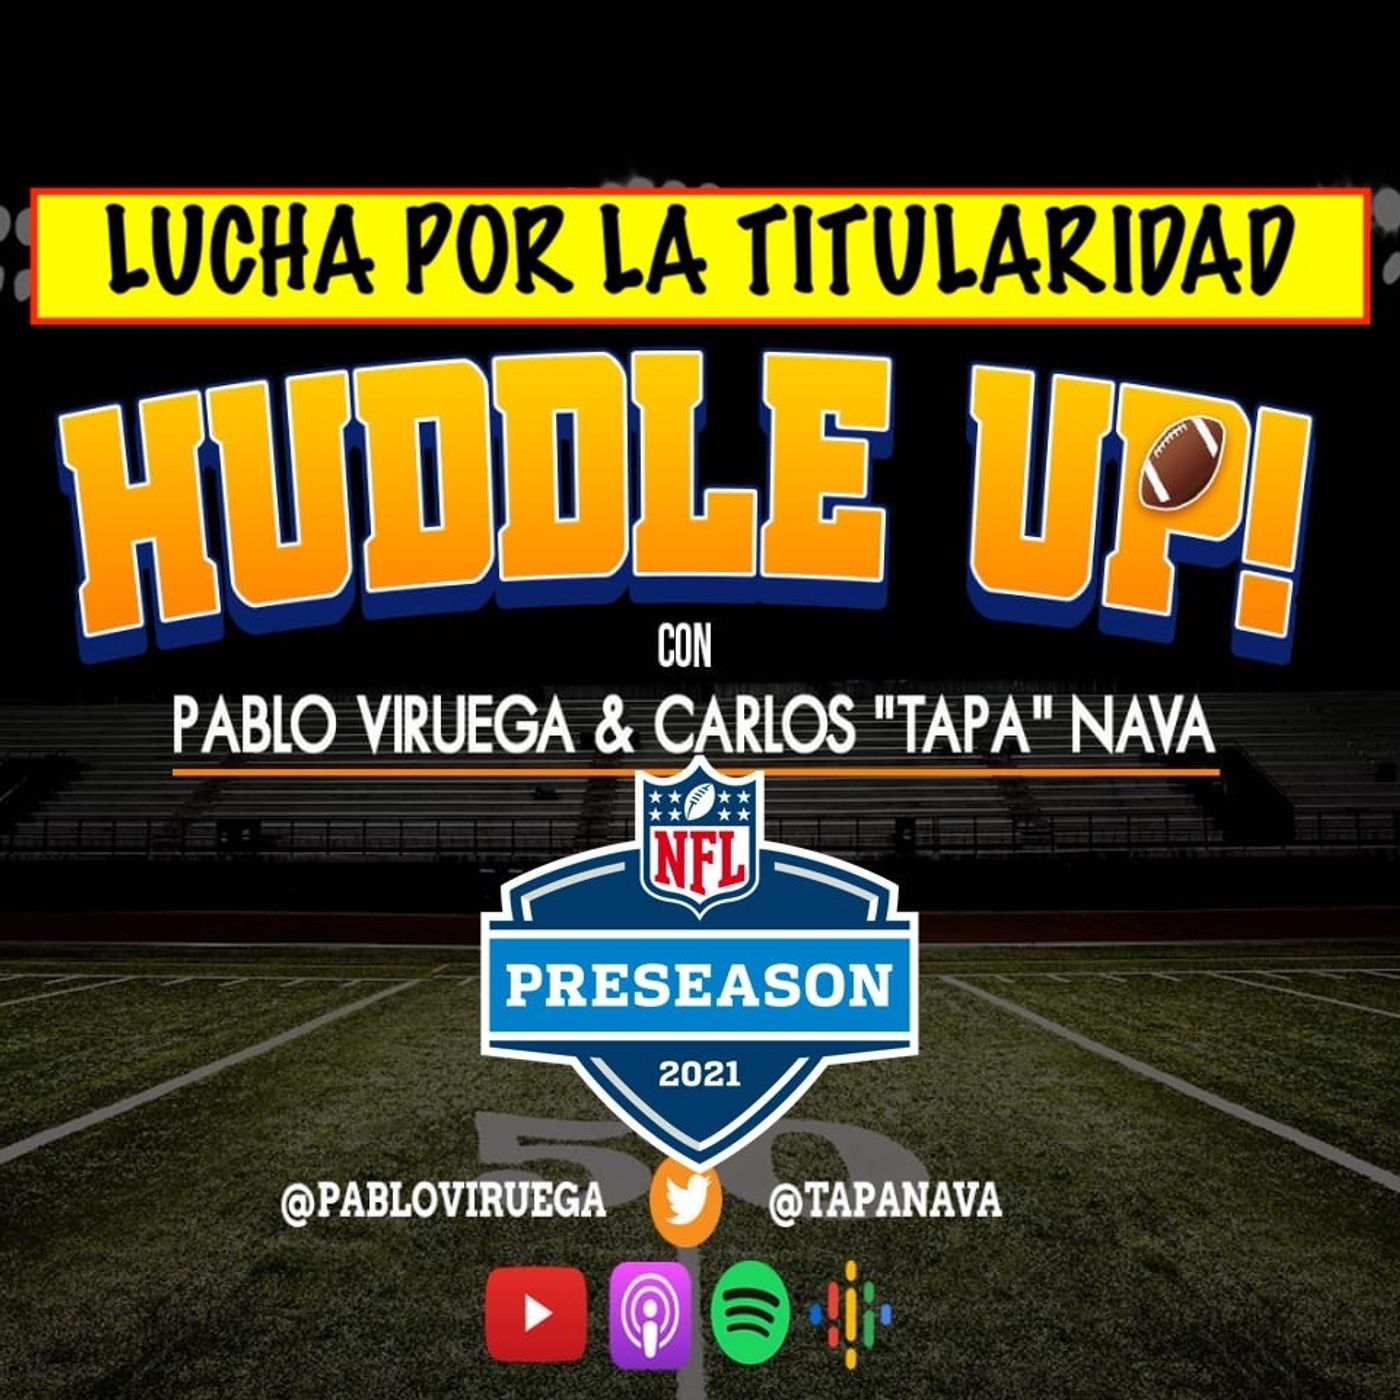 #HuddleUP Inicia #NFLPreseason QBs buscan la titularidad TapaNava y Pablo Viruega #NavaViruegaLI